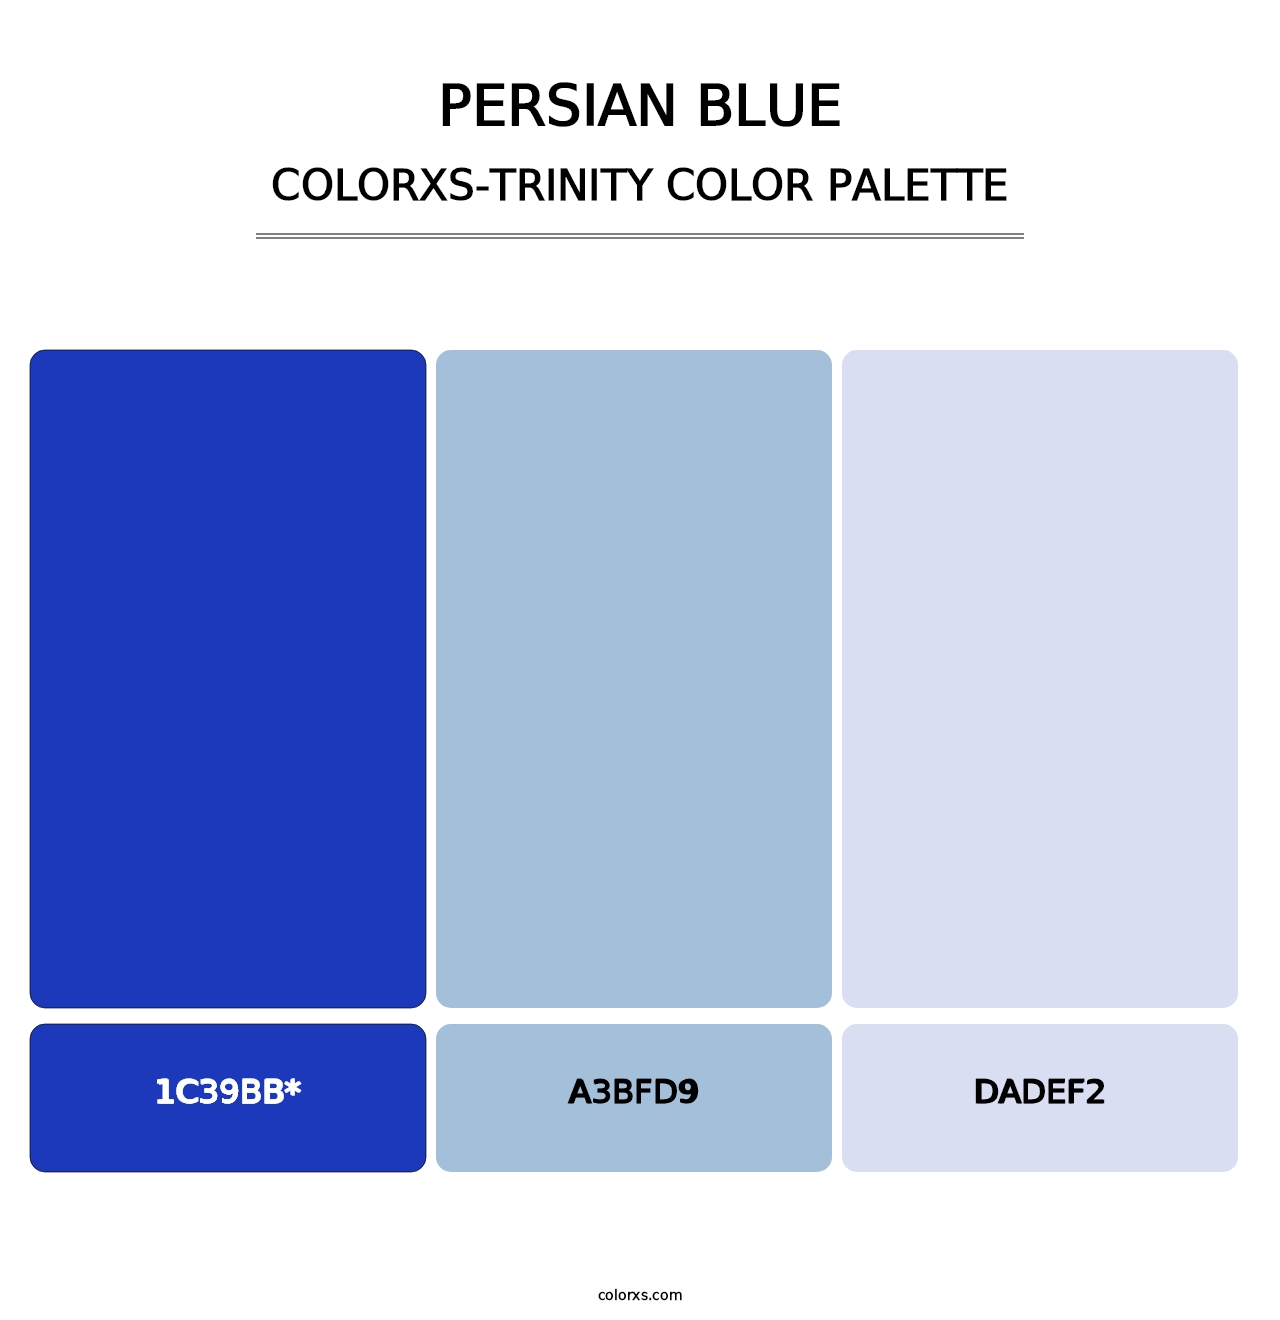 Persian Blue - Colorxs Trinity Palette